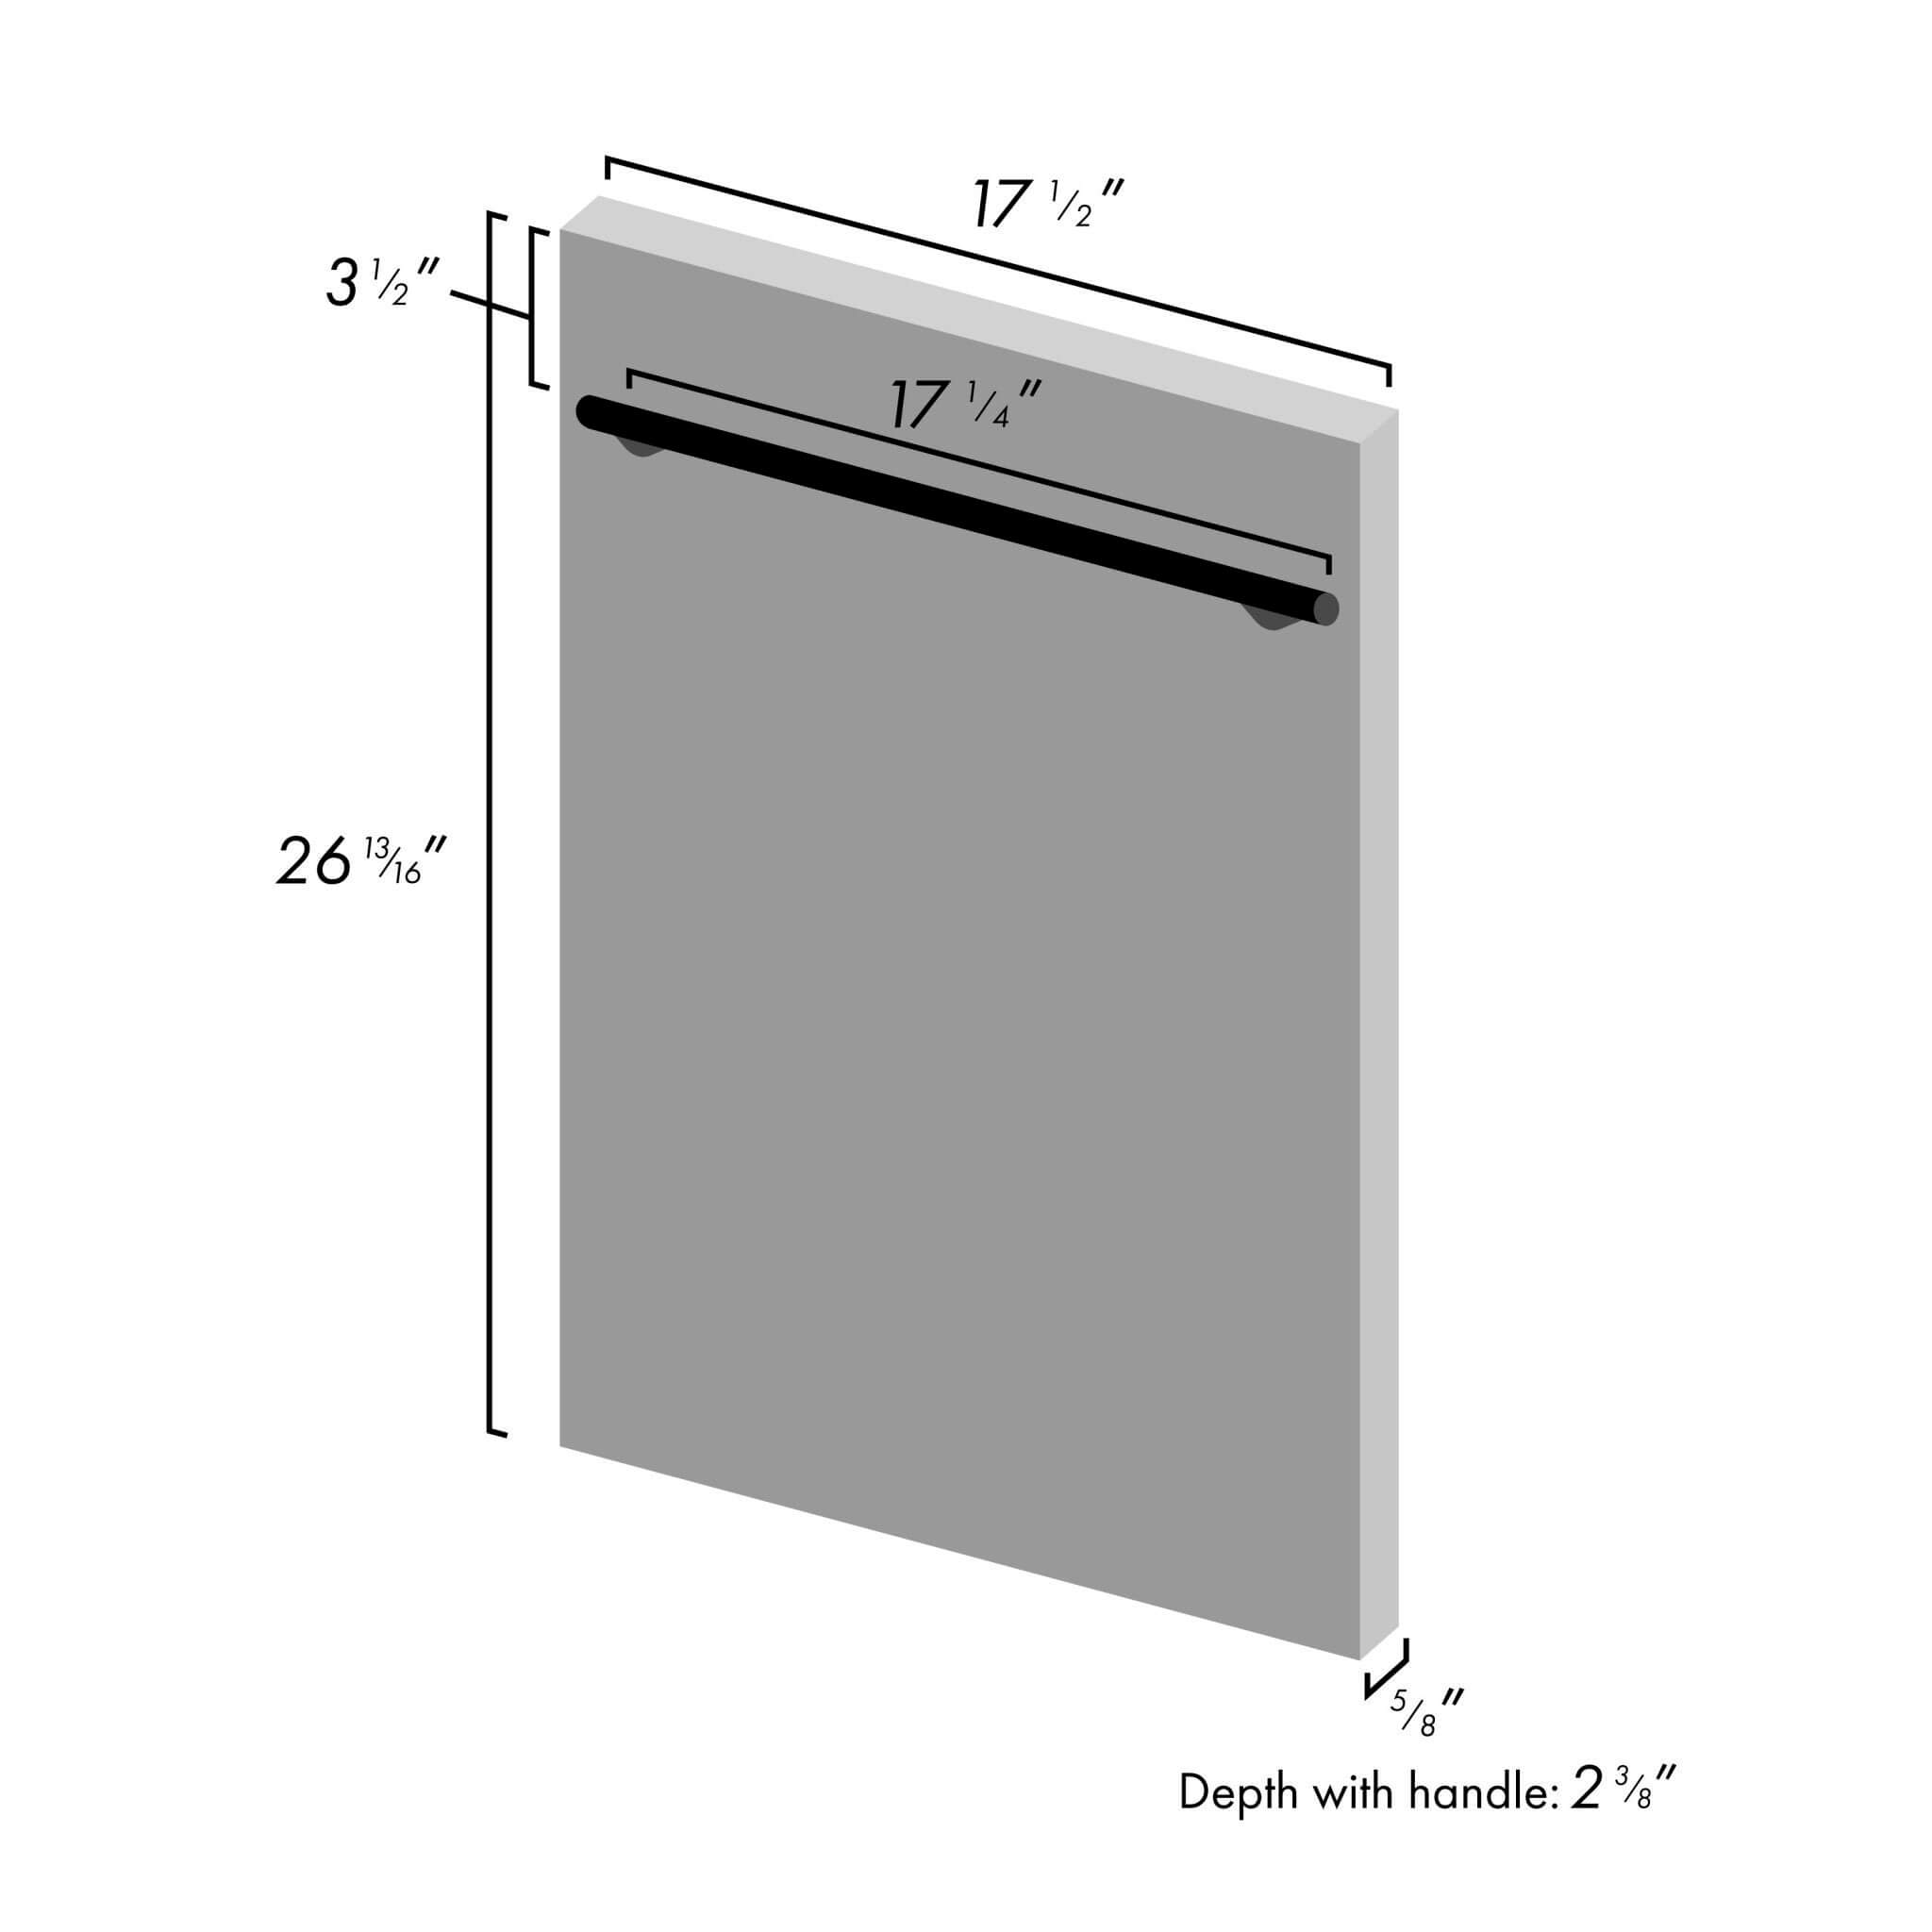 ZLINE 18" Dishwasher Panel with Modern Handle - Dimensional measurements